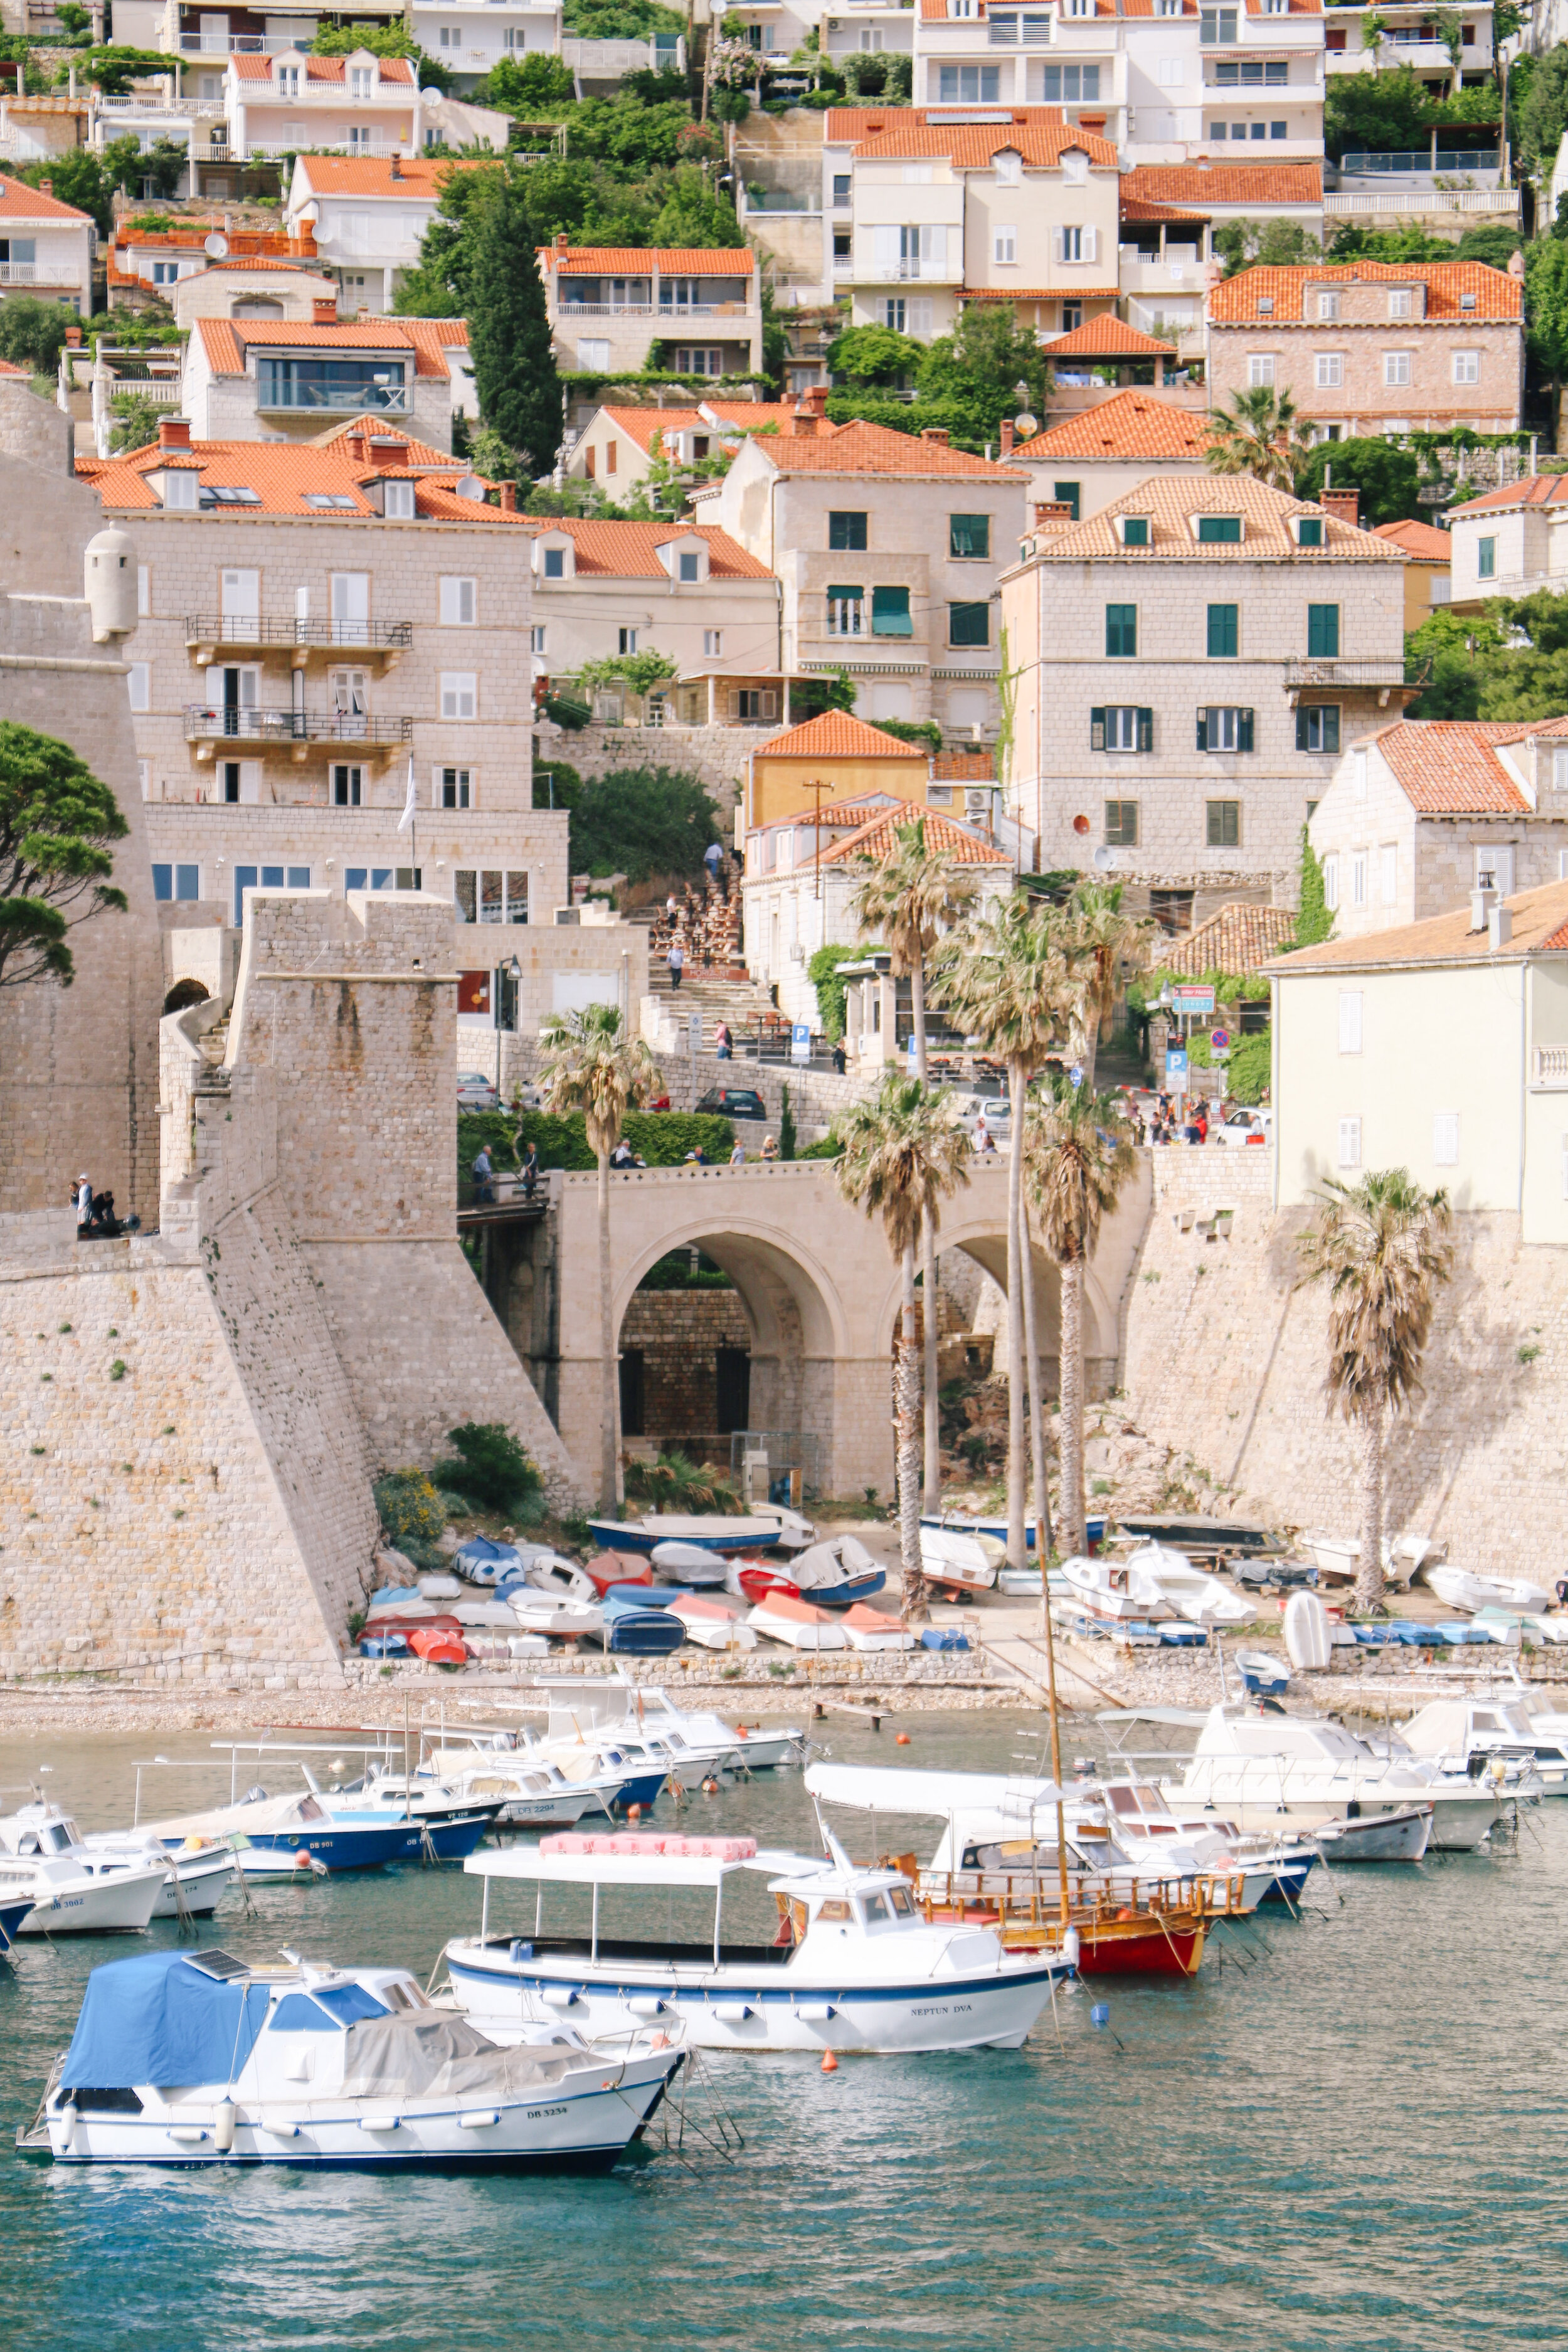 72 Hours in Dubrovnik, Croatia